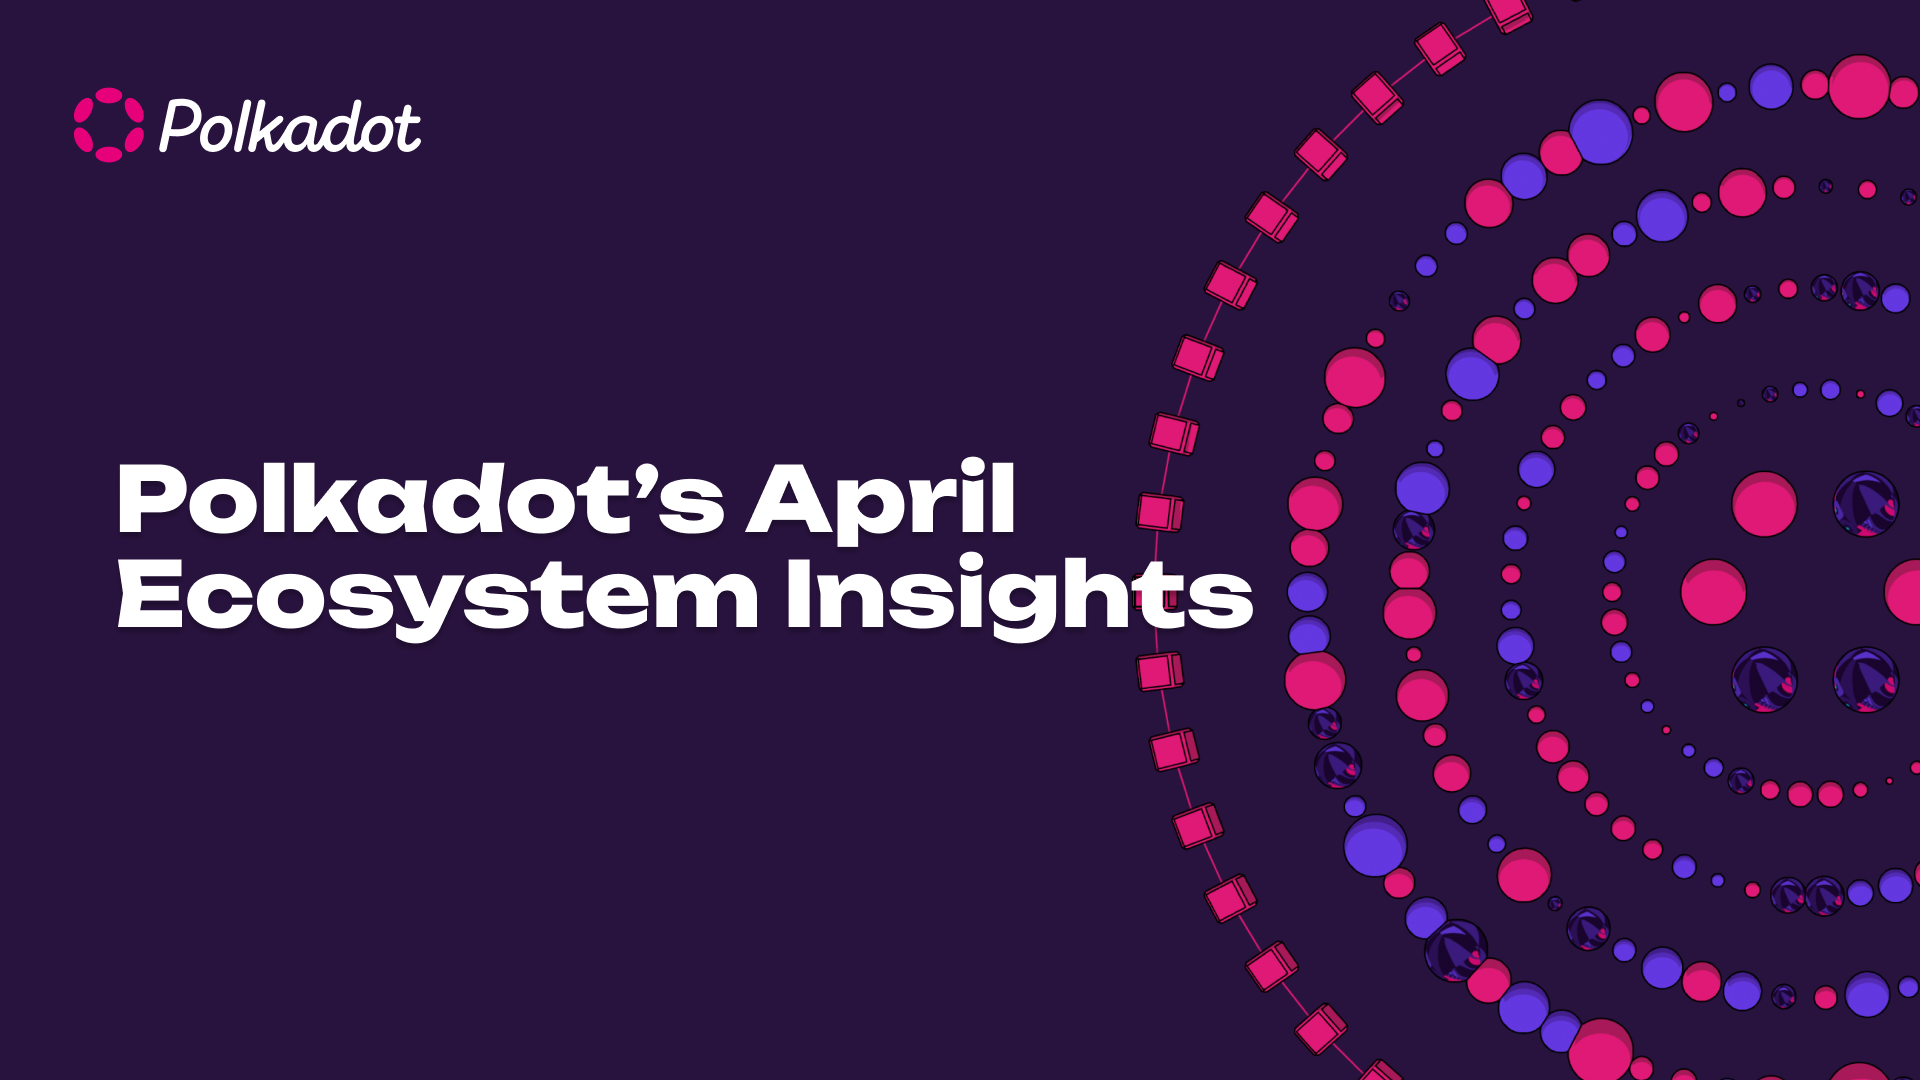 Polkadot’s April Ecosystem Insights